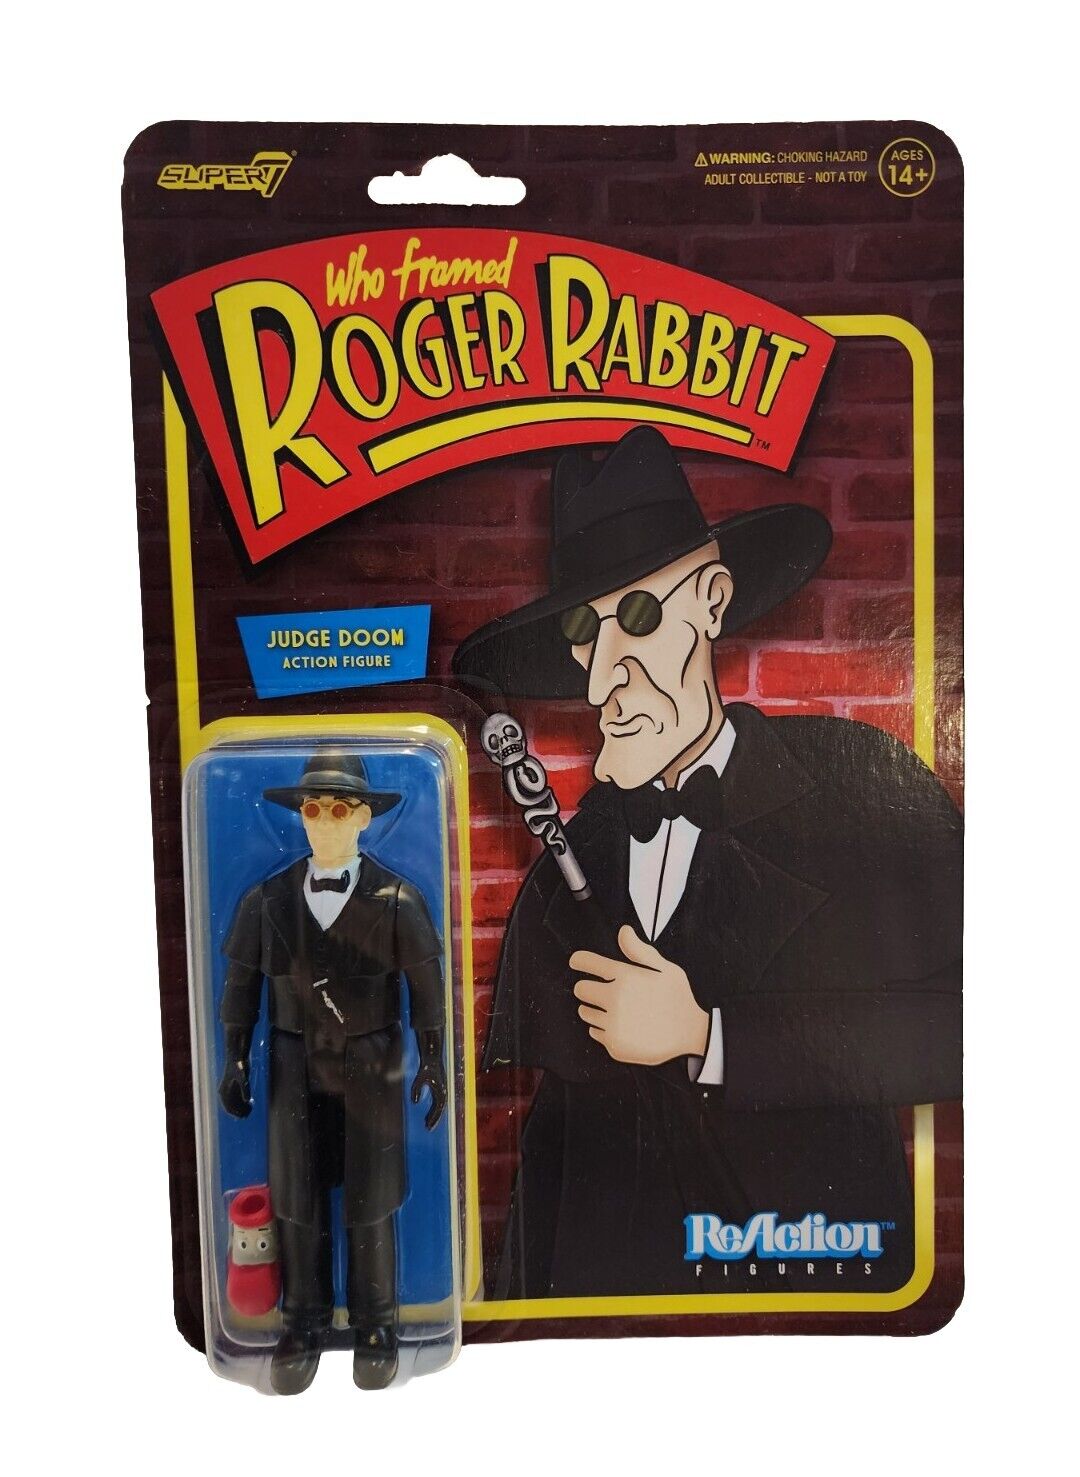 REACTION Figurine Super7 Judge Doom That Wants The Skin Roger Rabbit Reaction 